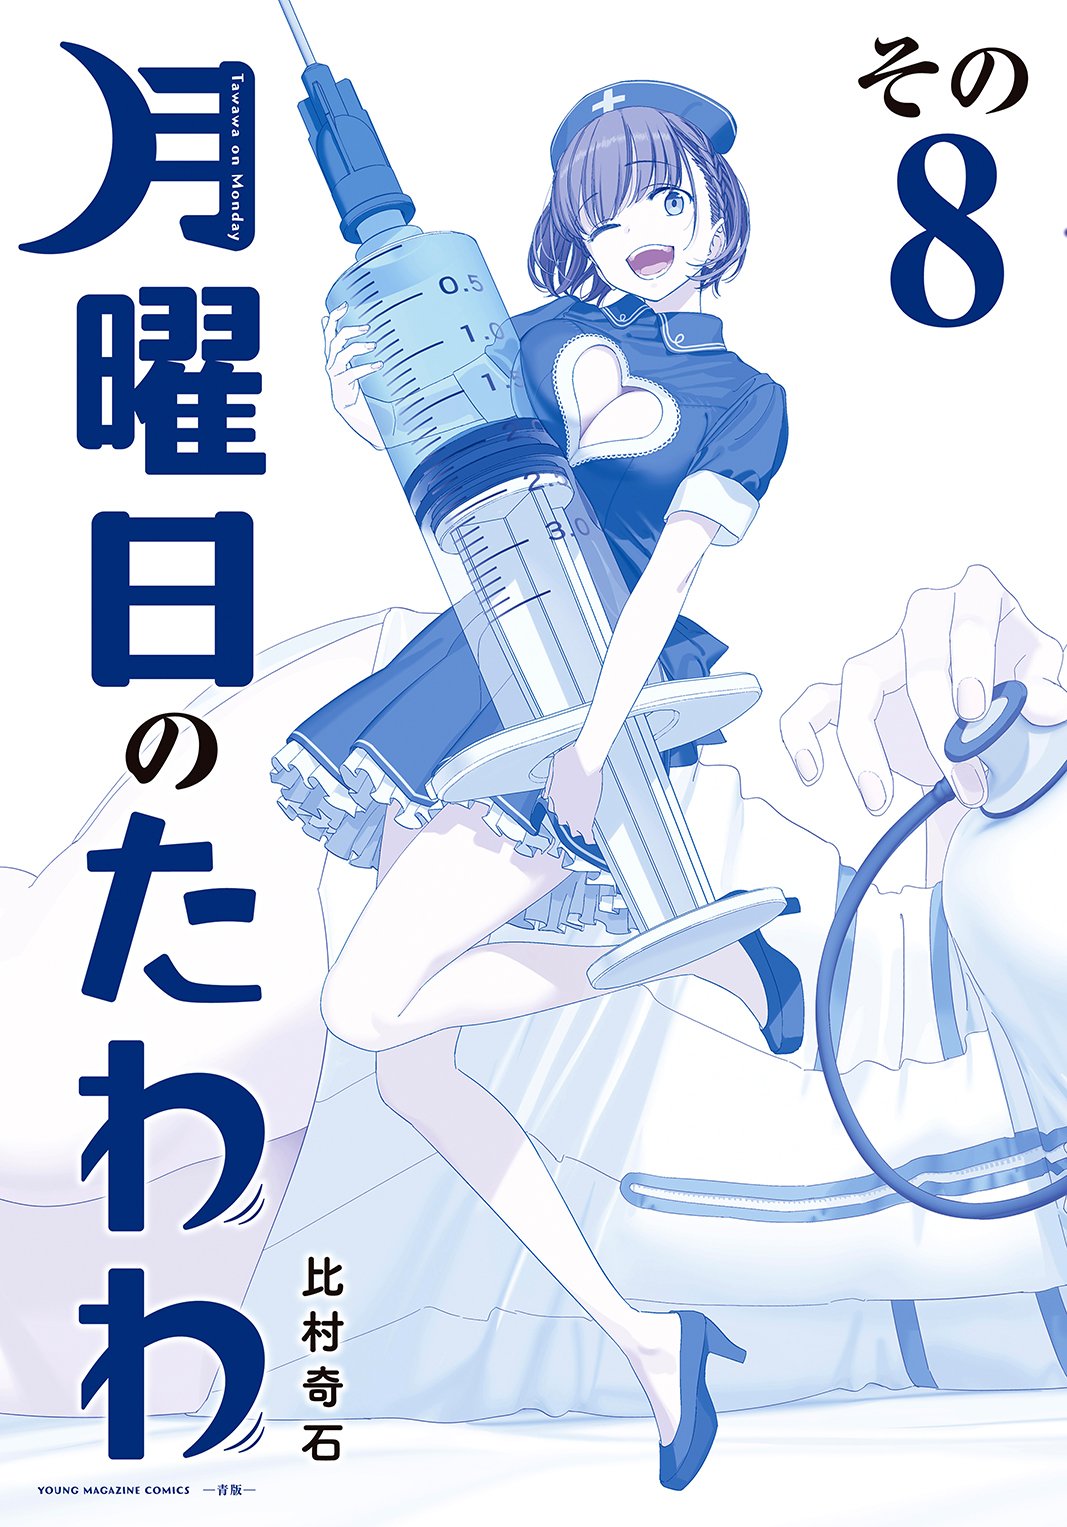 El manga Getsuyoubi no Tawawa presenta las portadas para su volumen #8